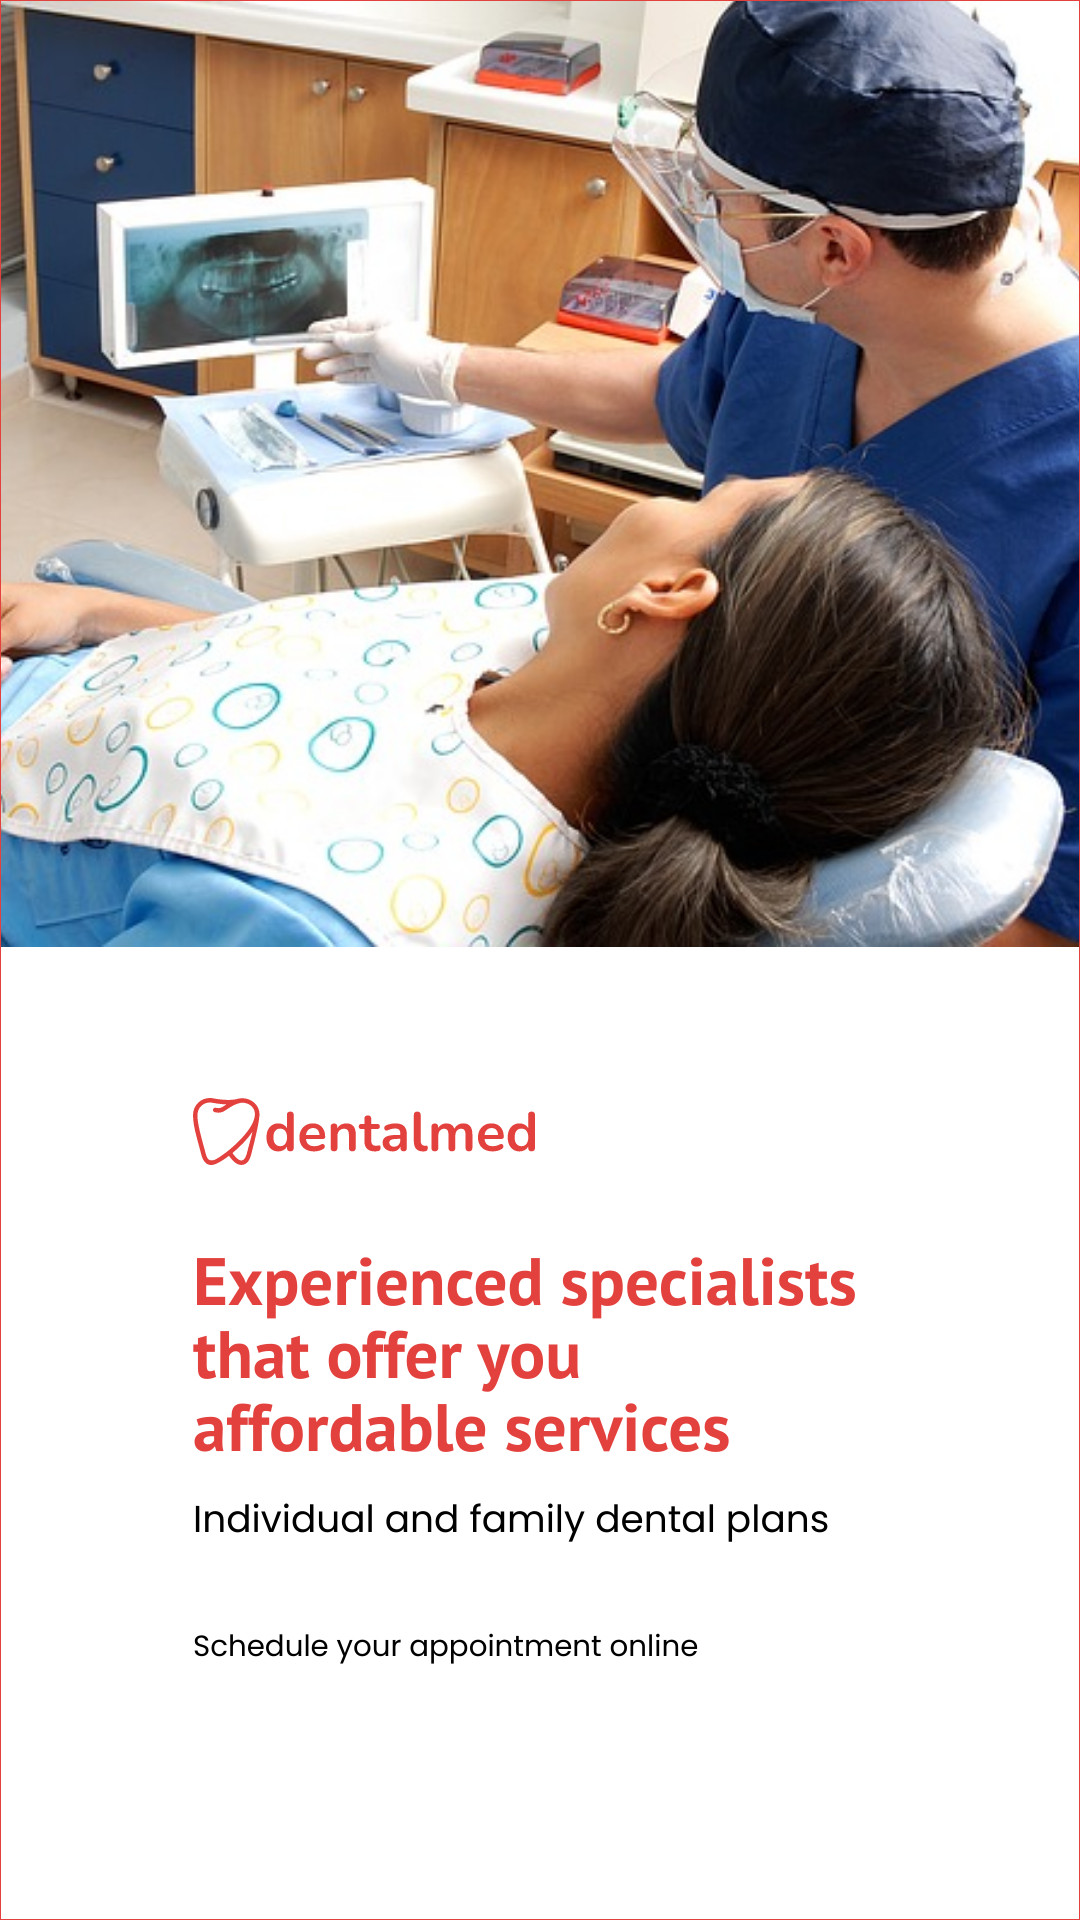 Affordable Dental Service Plans Inline Rectangle 300x250